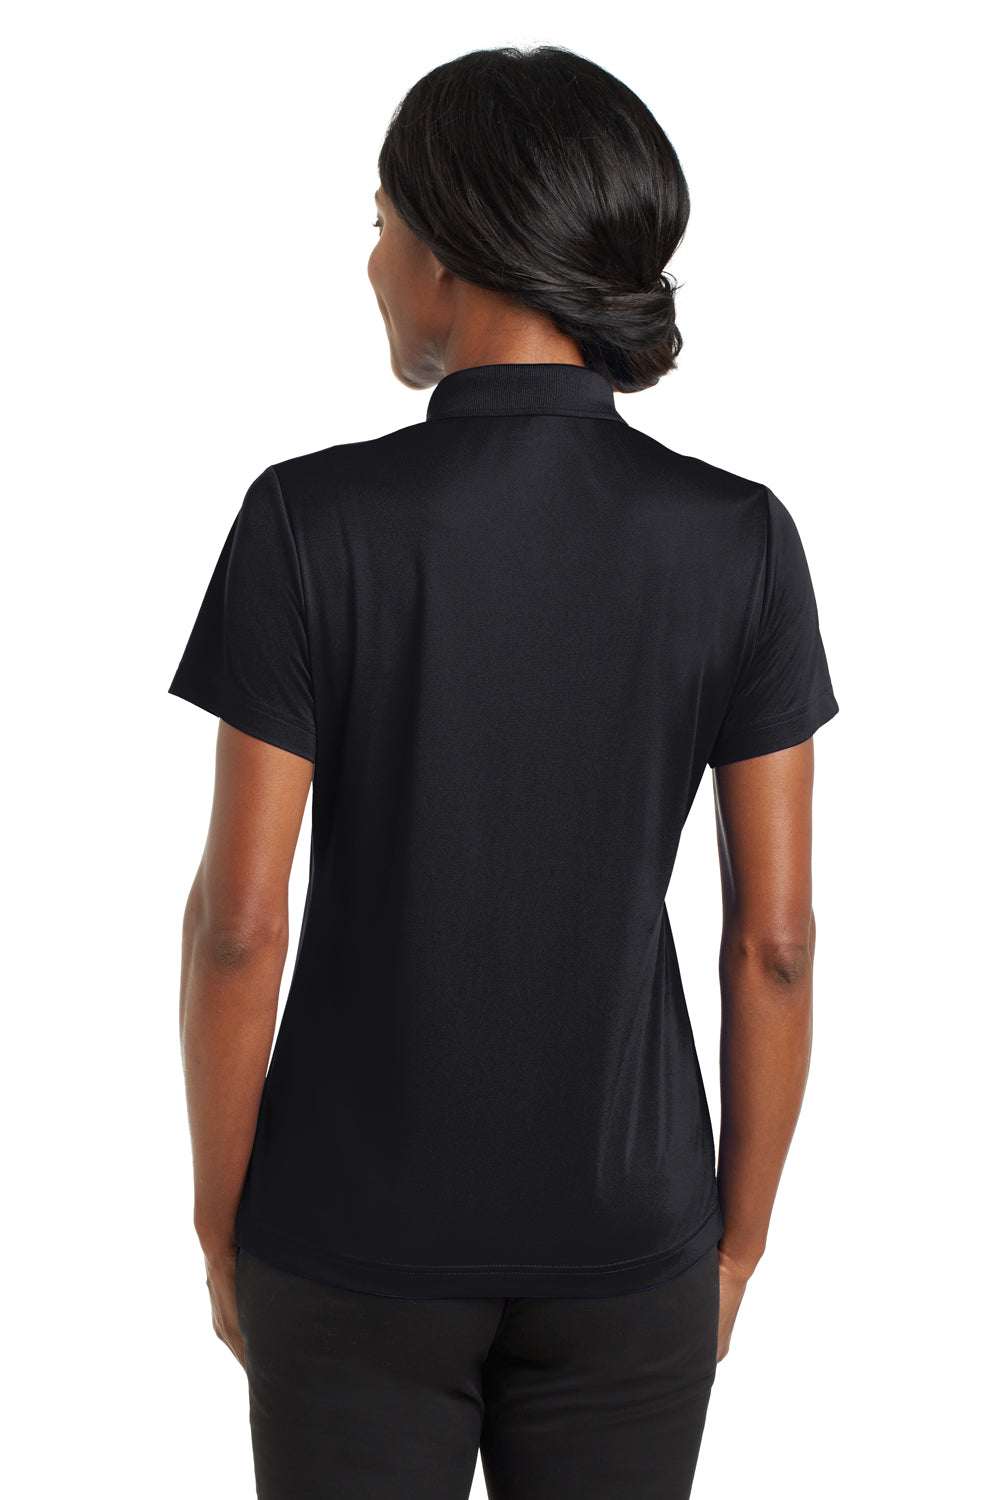 CornerStone CS422 Womens Gripper Moisture Wicking Short Sleeve Polo Shirt Black Back